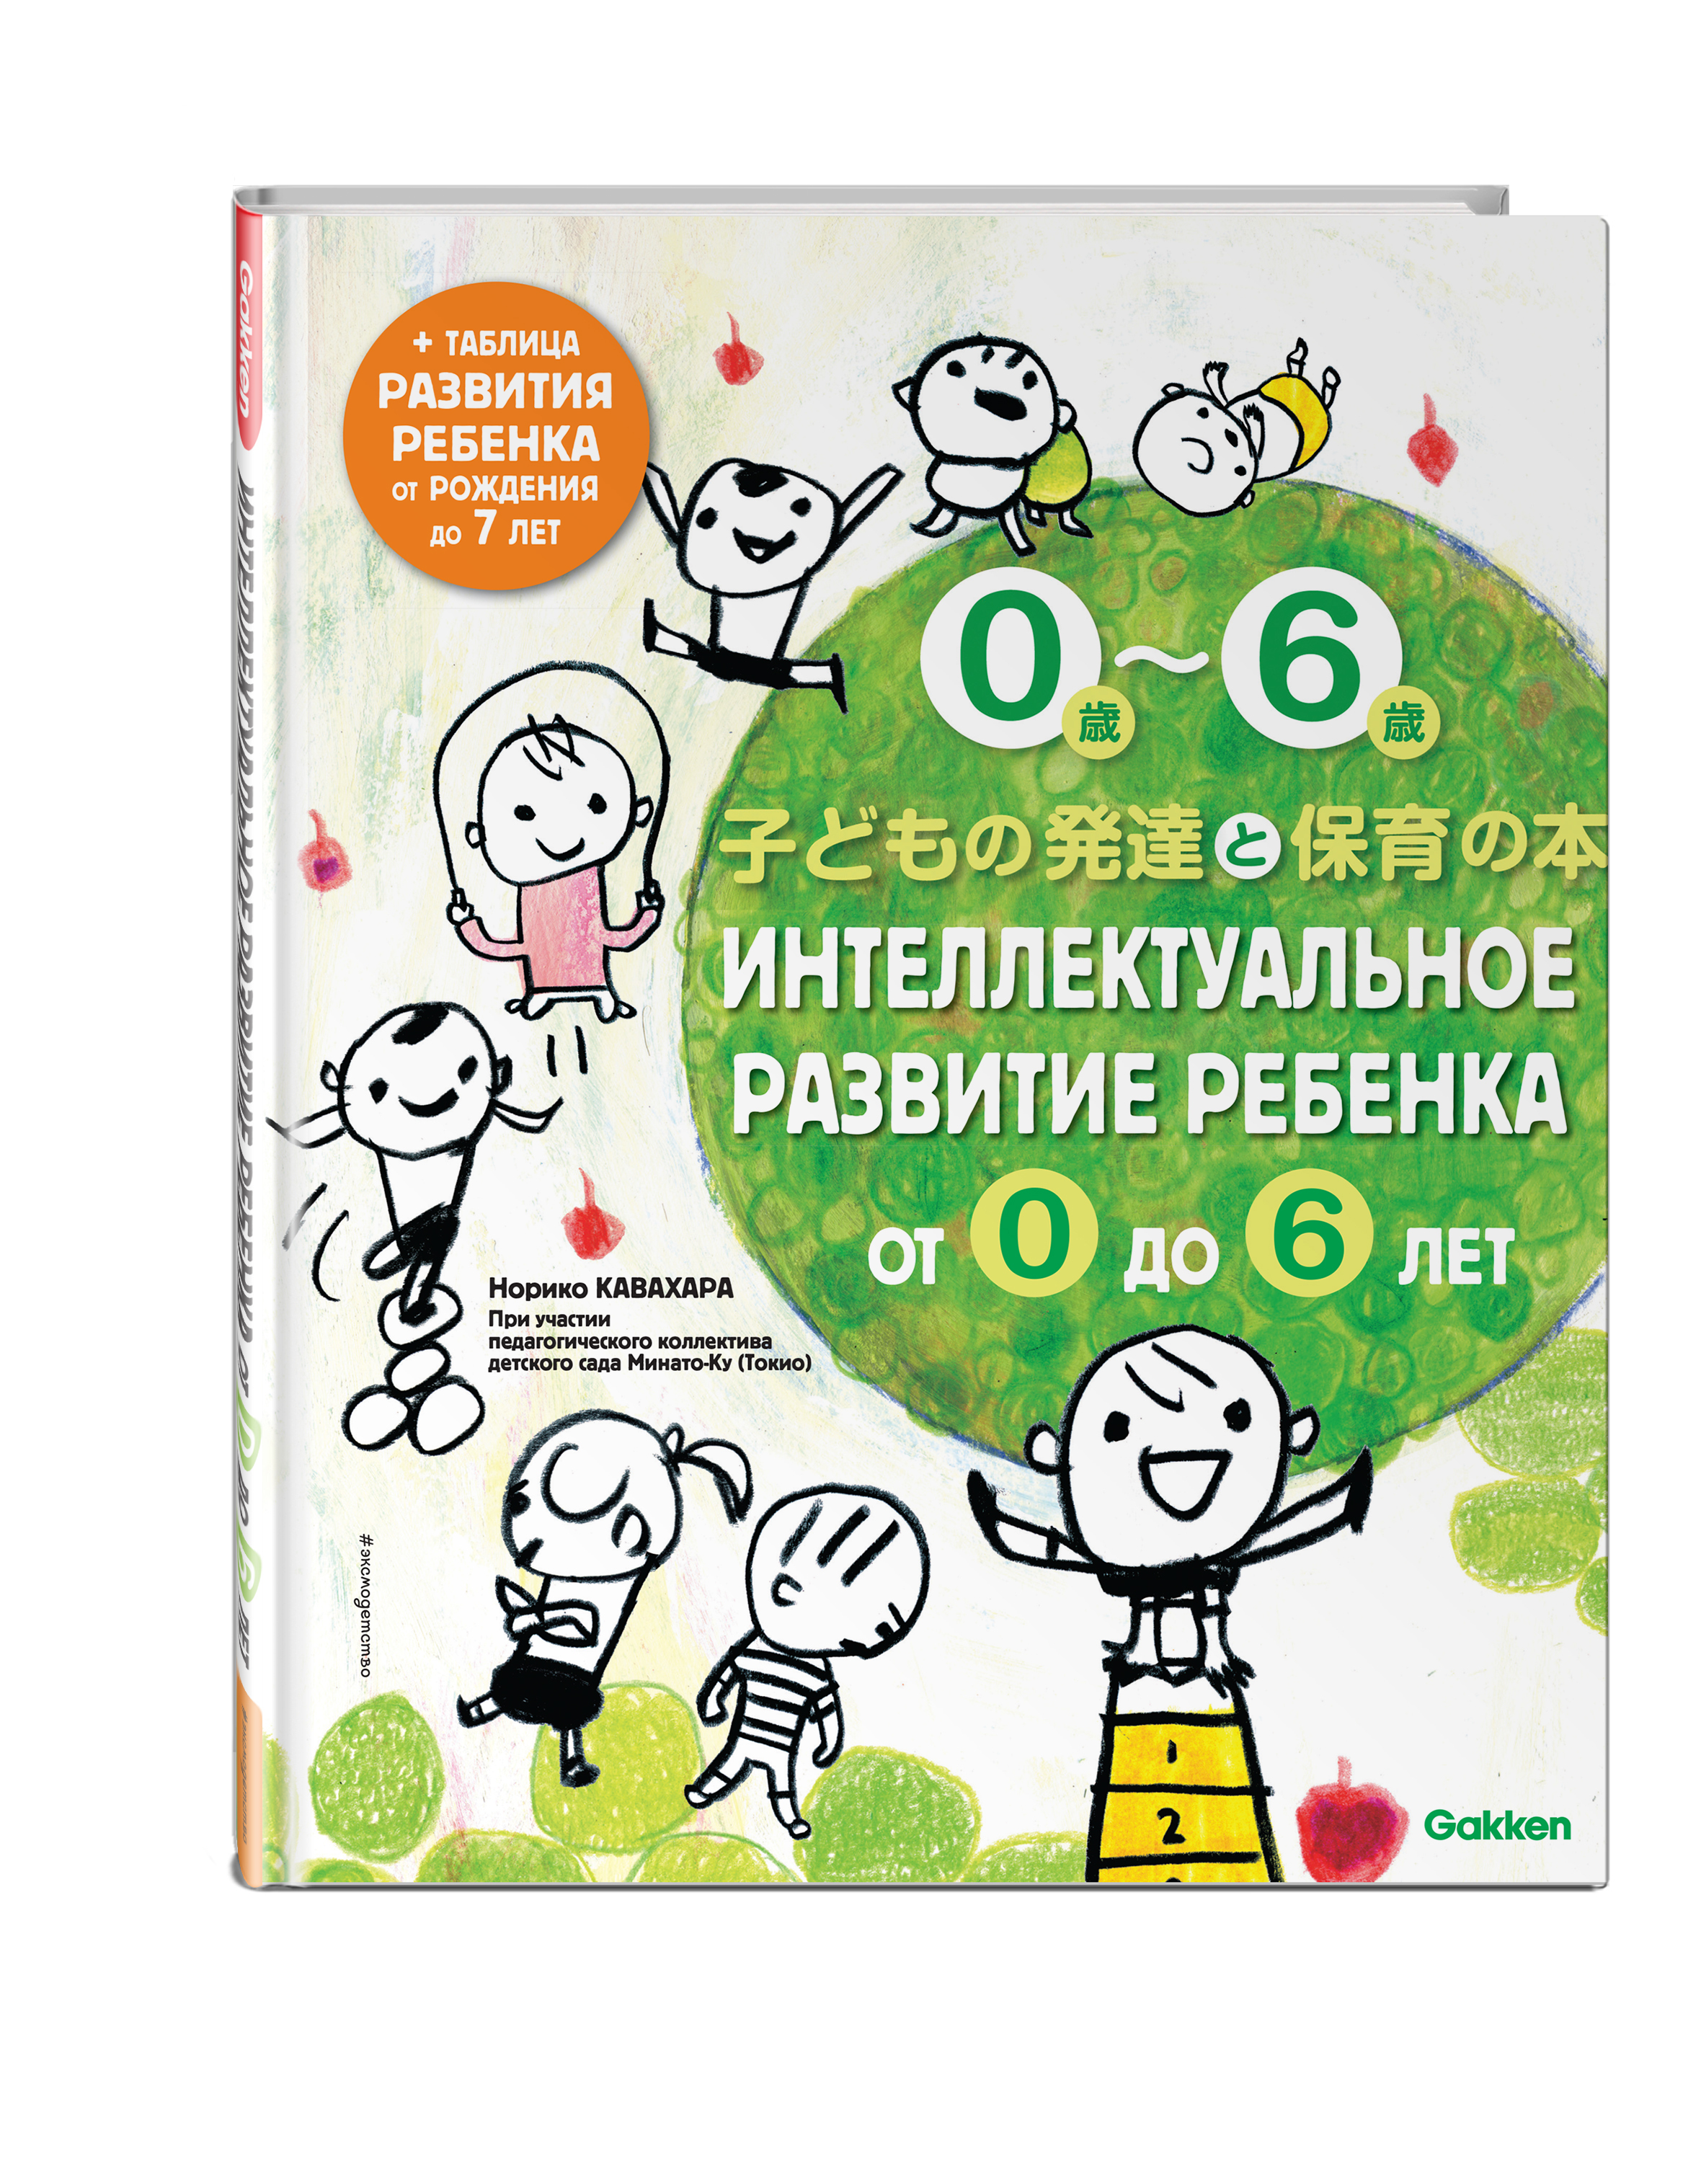 Развитие ребёнка | Играйка развивайка | ВКонтакте